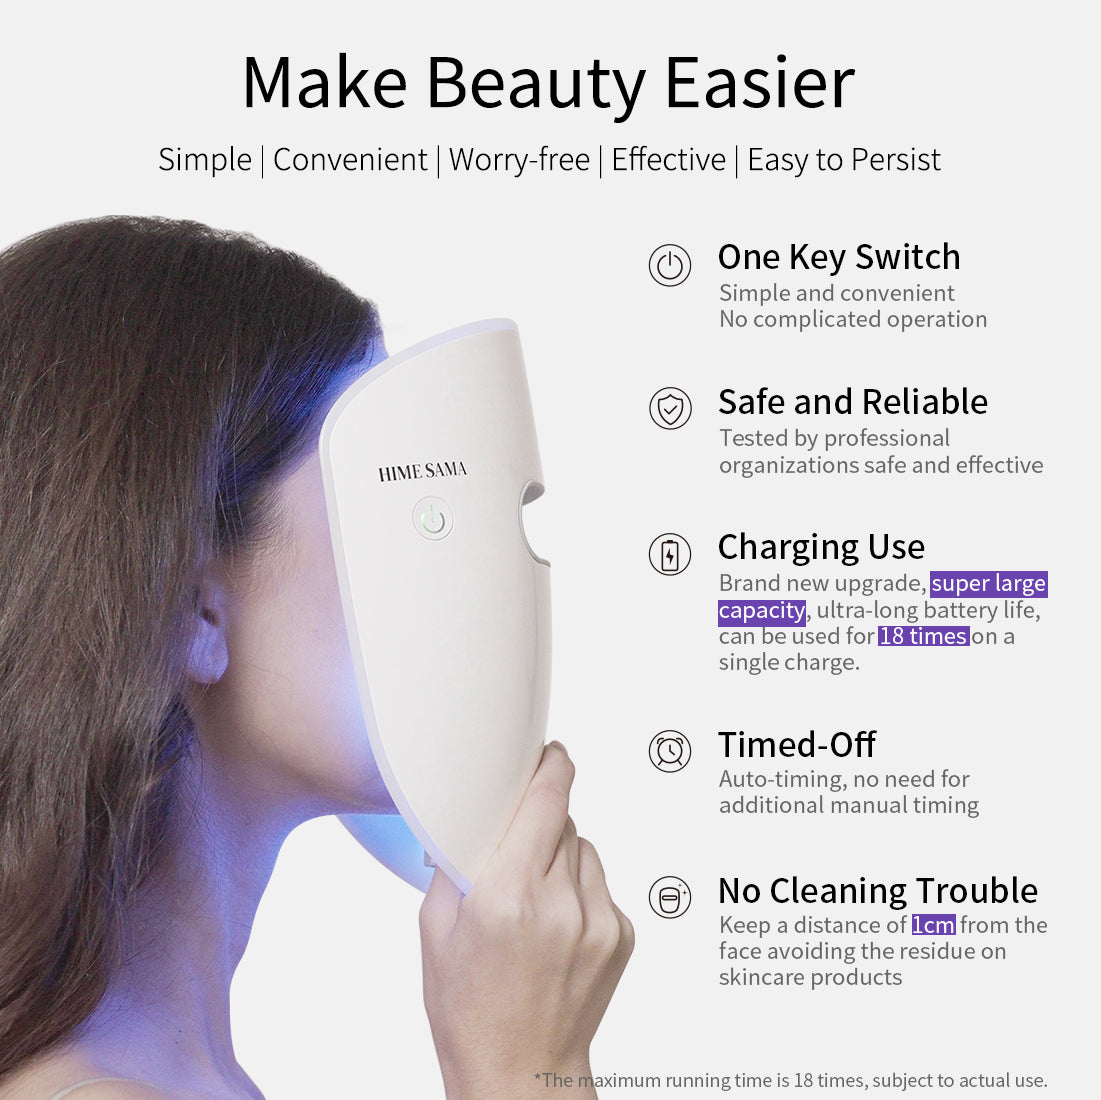 Máscara facial LED Terapia de luz Dispositivo de belleza de fotones faciales (Miracle MAX)